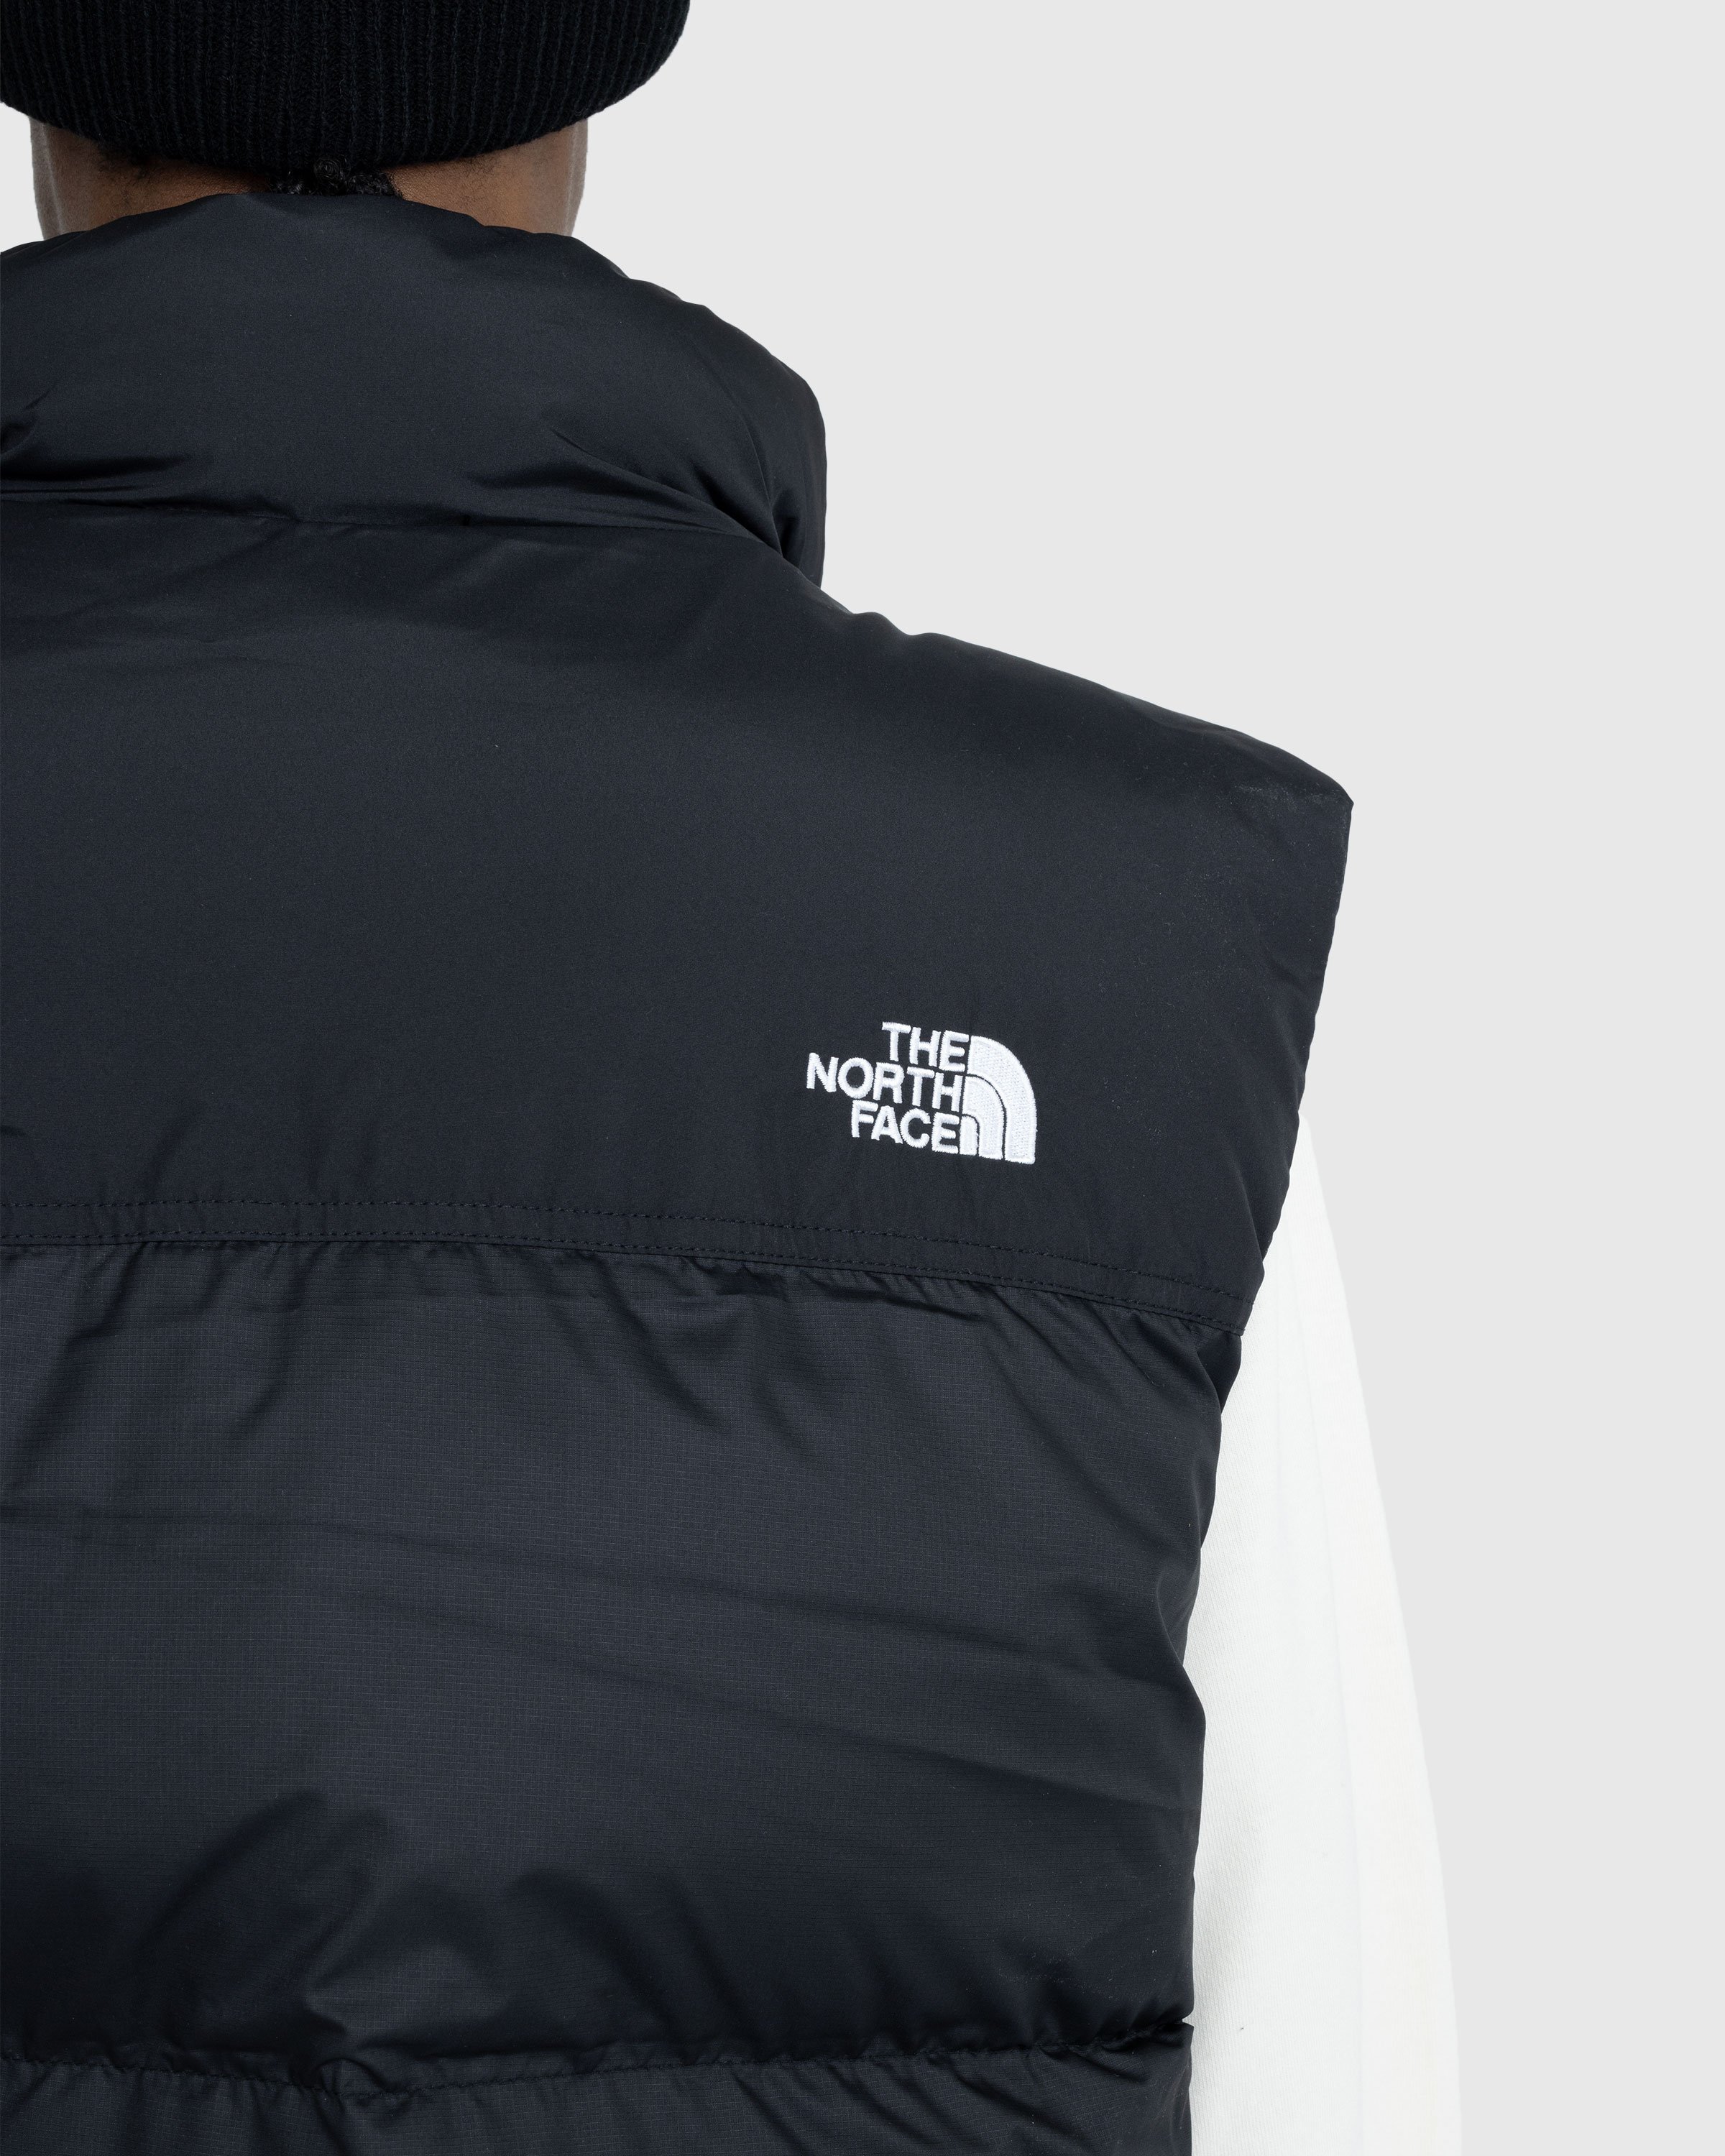 The North Face - M SAIKURU VEST - Clothing - Black - Image 5